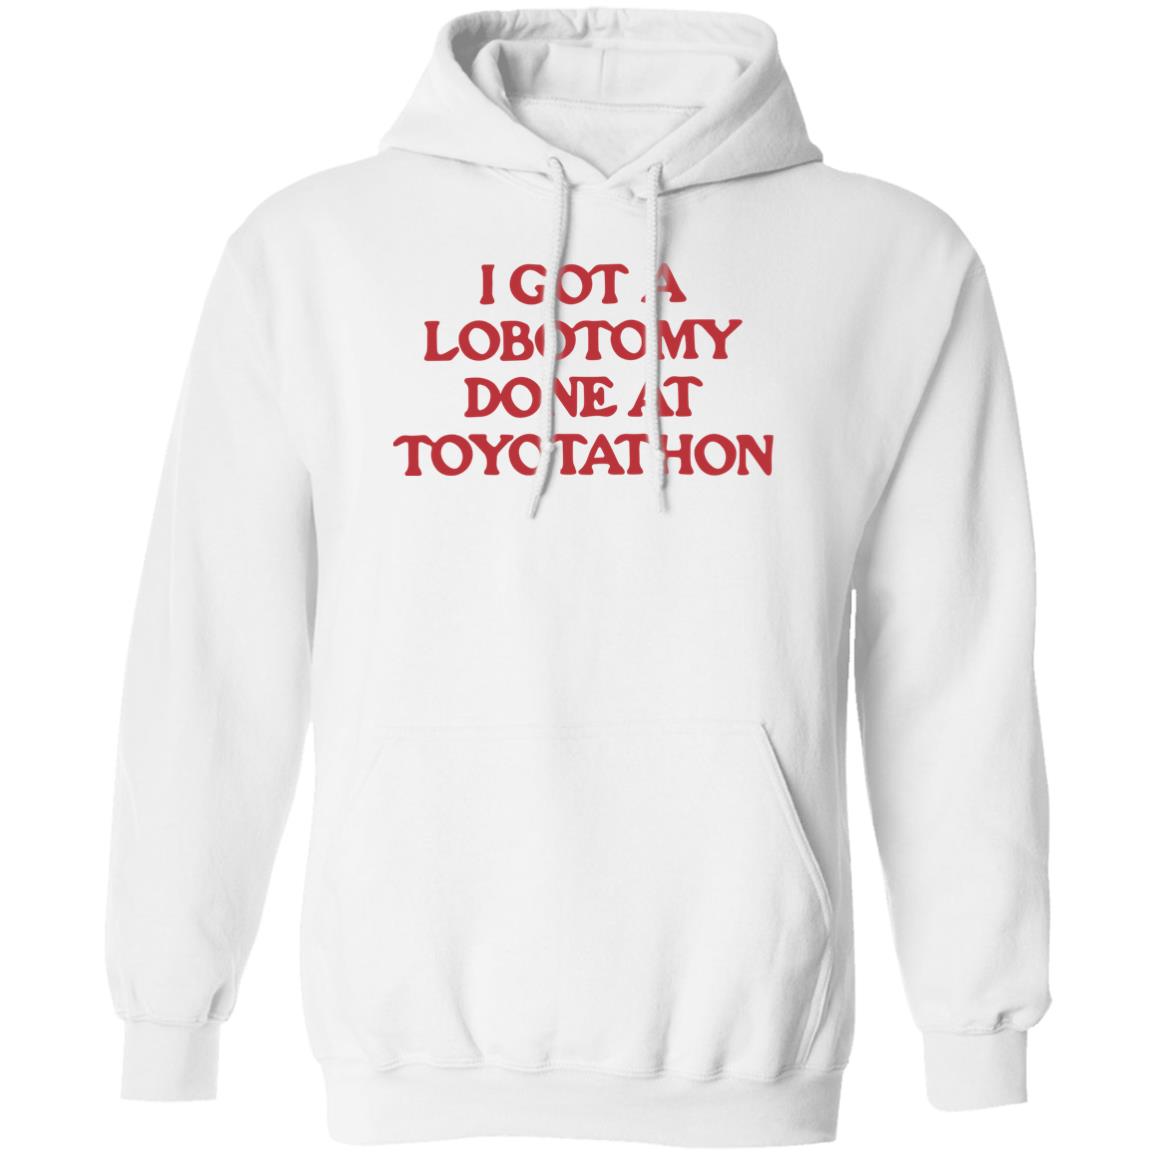 I Got A Lobotomy Done At Toyotathon Shirt 2